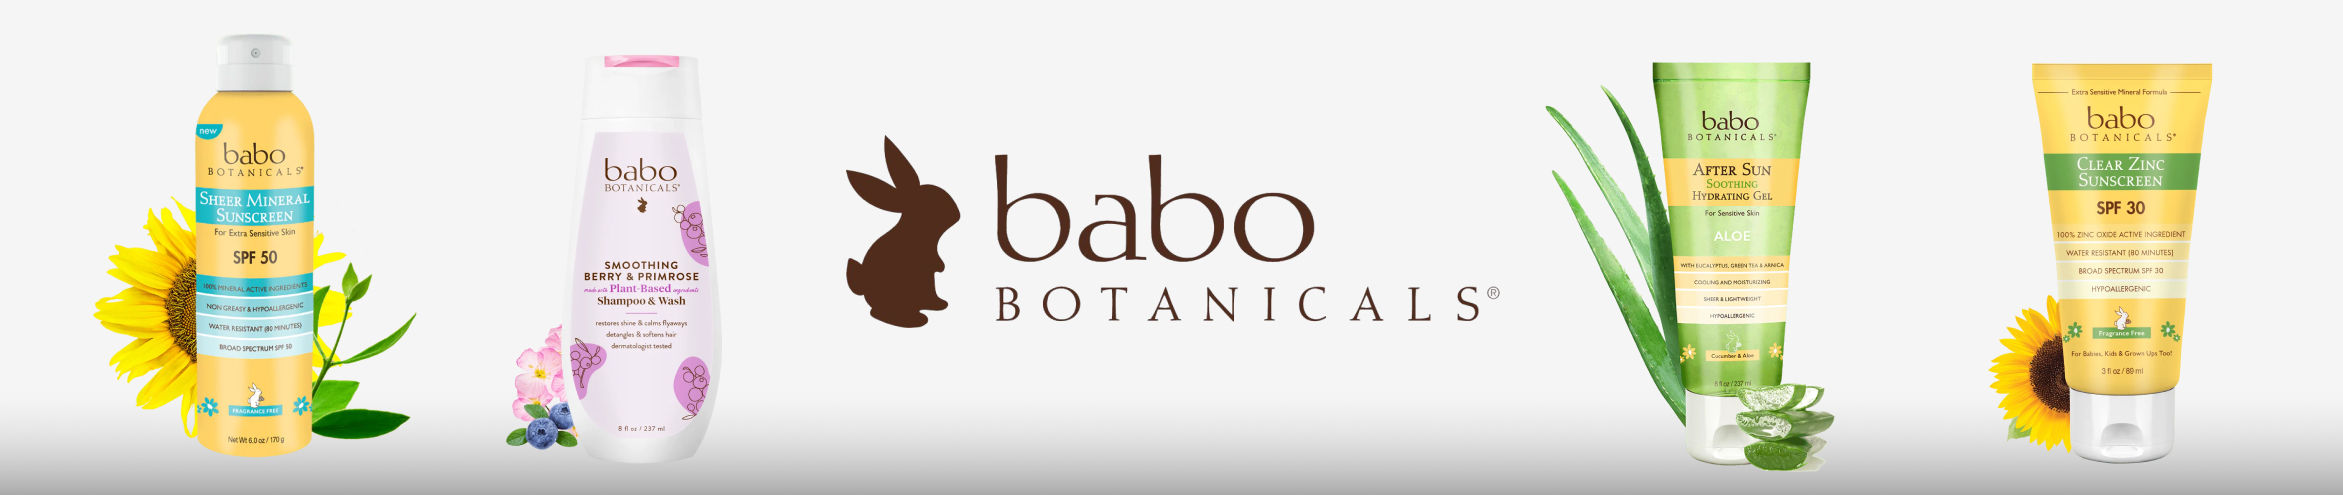 Babo Botanicals - Sunscreen